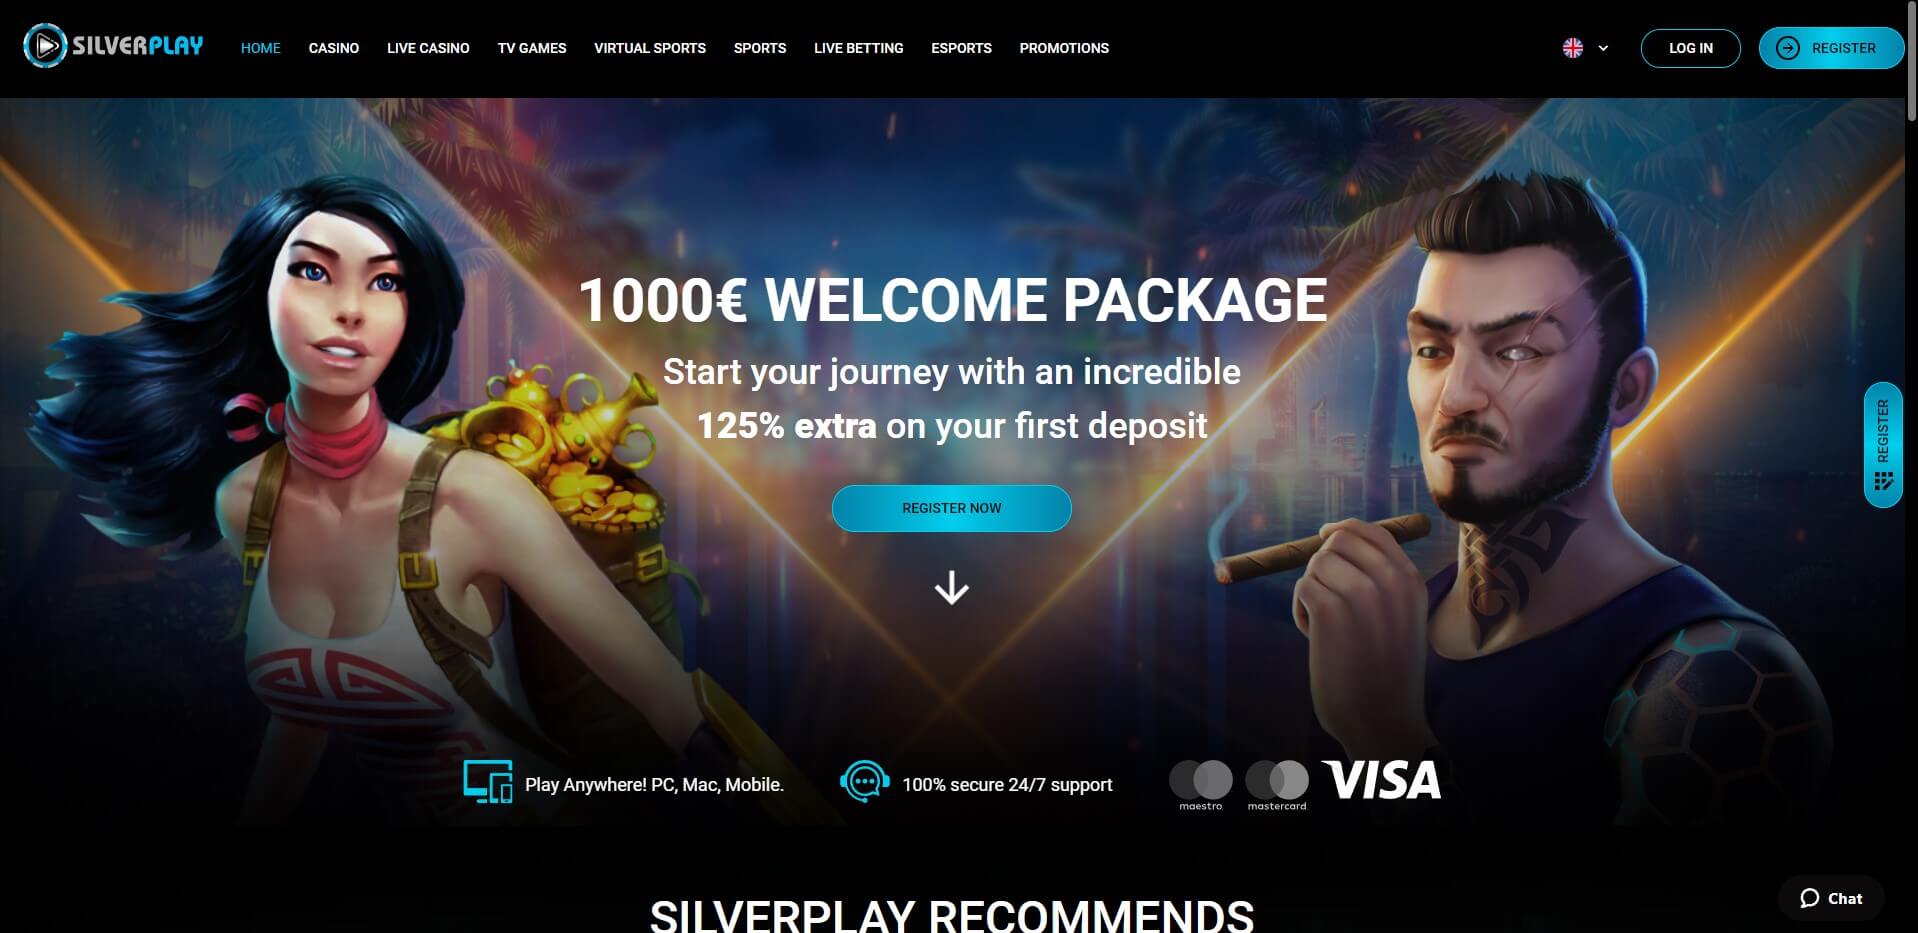 silverplay.com - Website Review